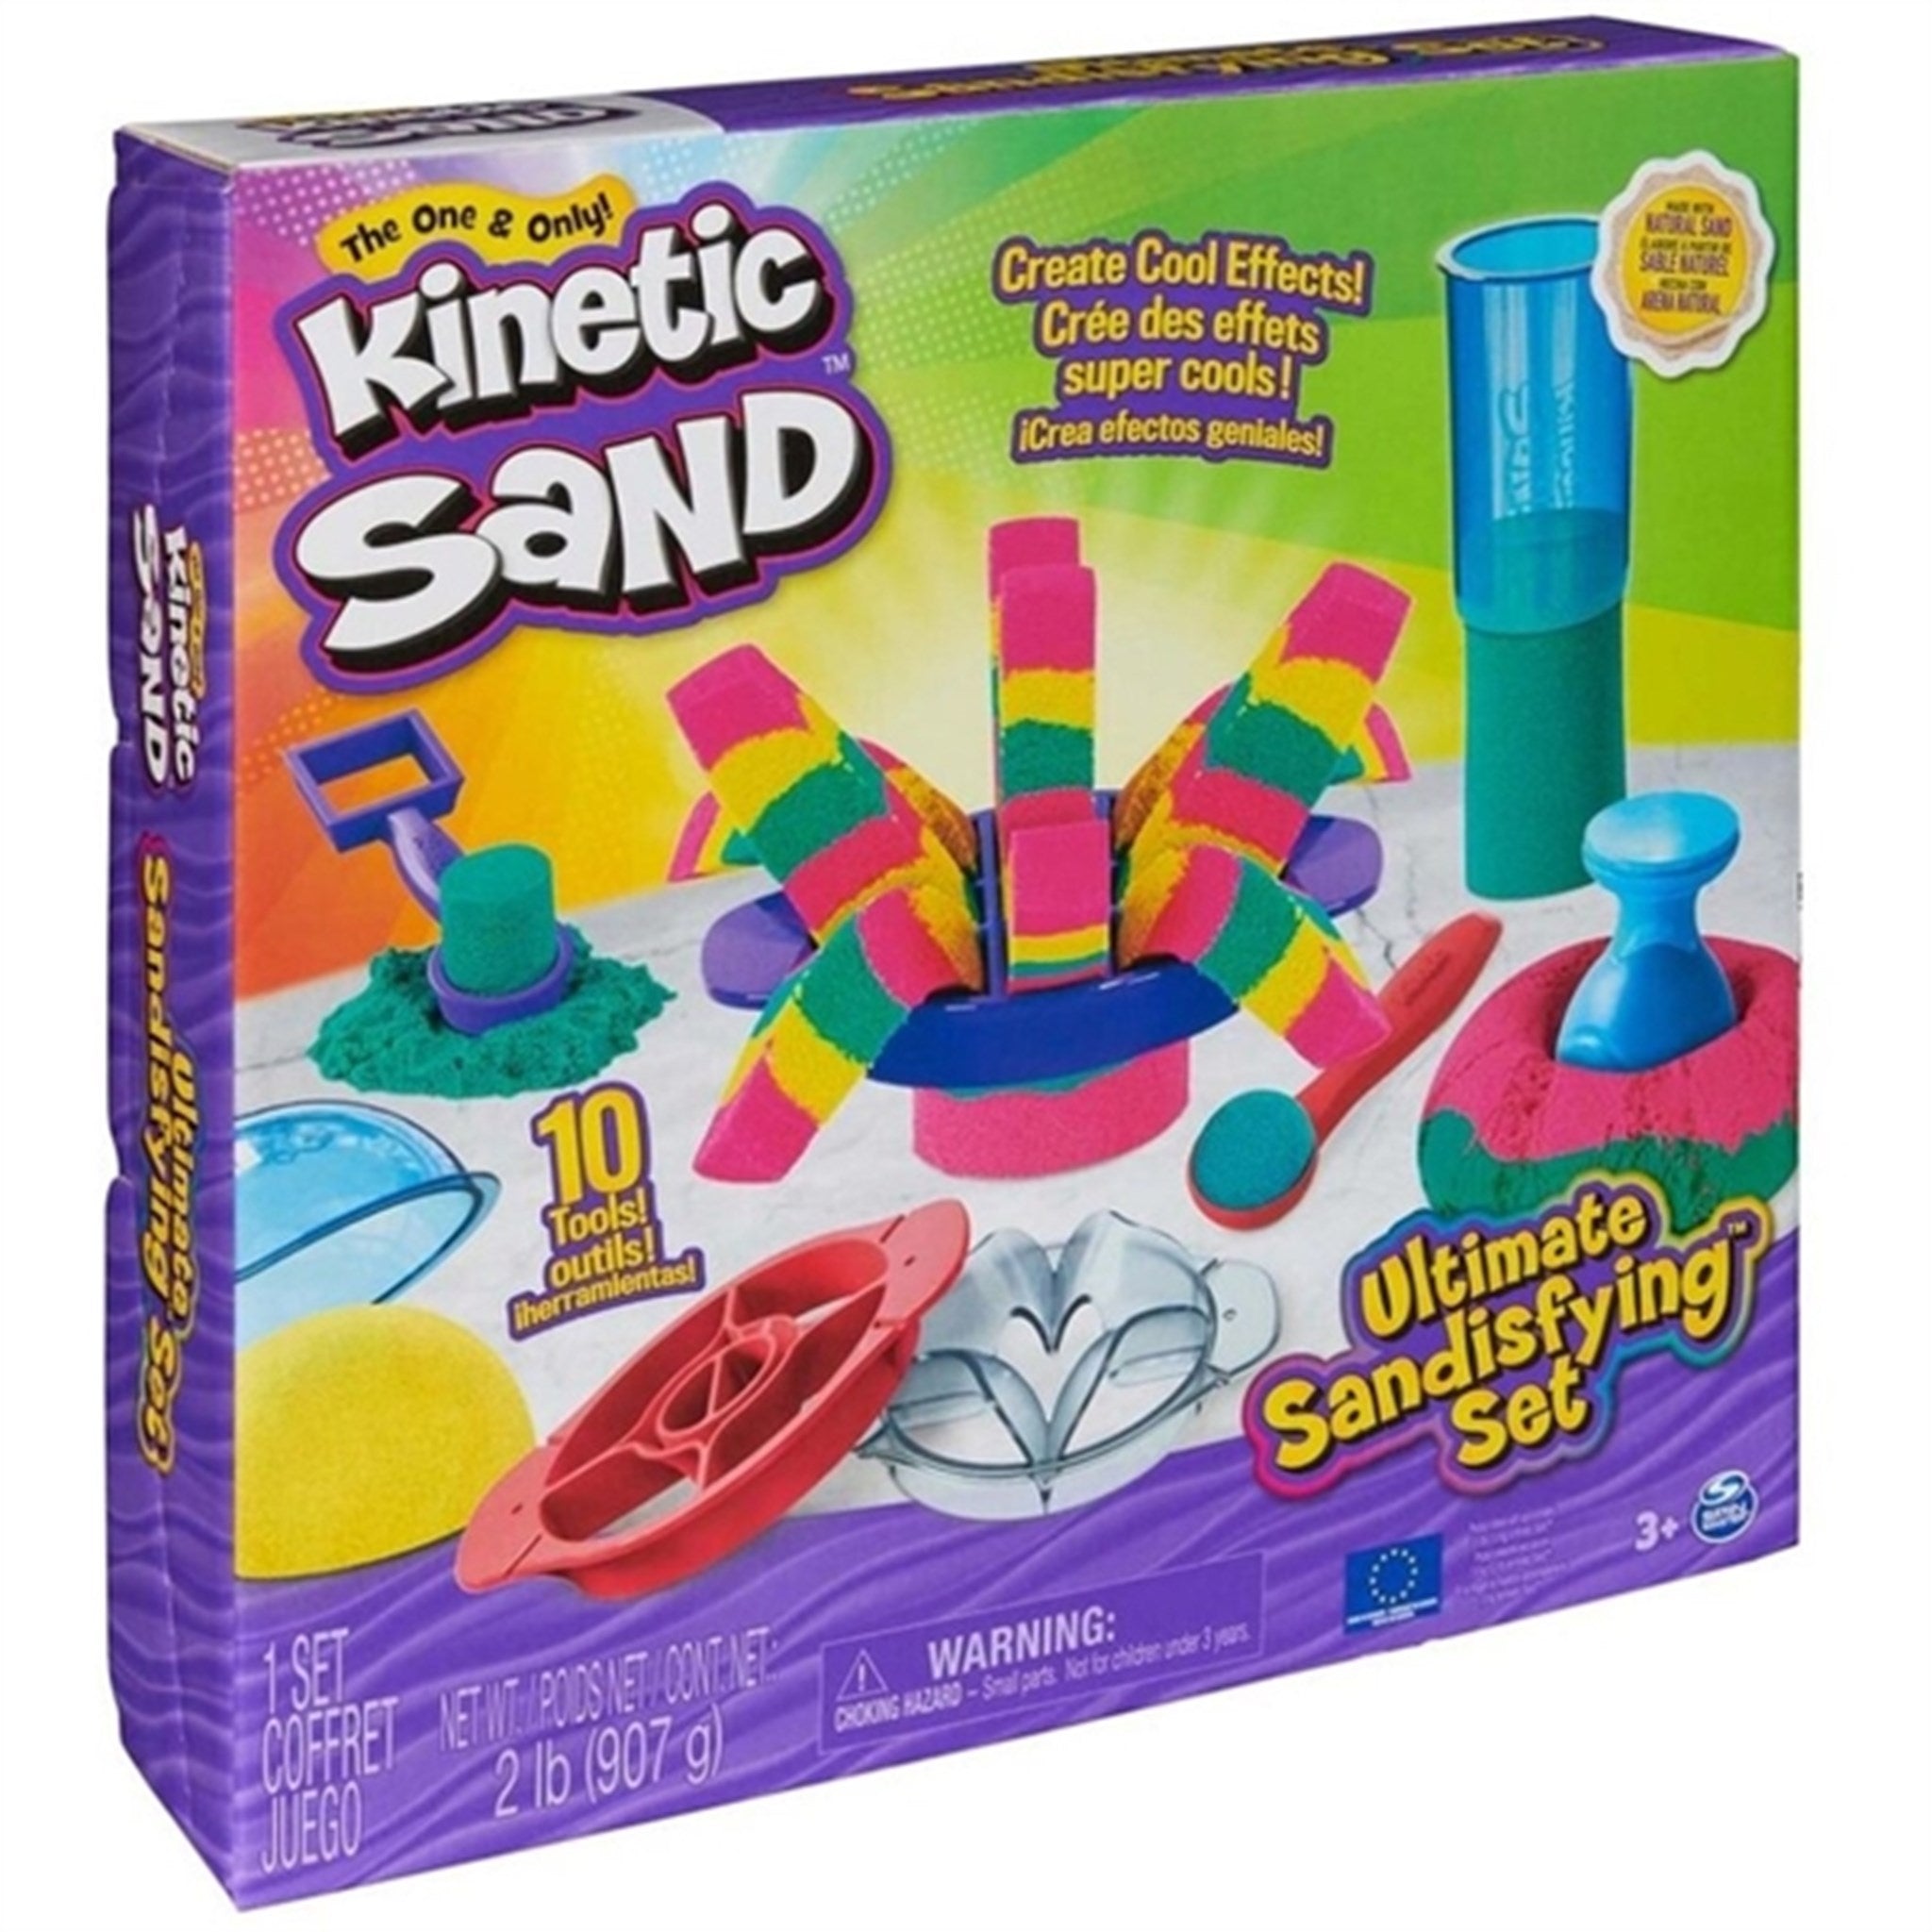 Kinetic Sand Ultimate Sandisfying Sæt